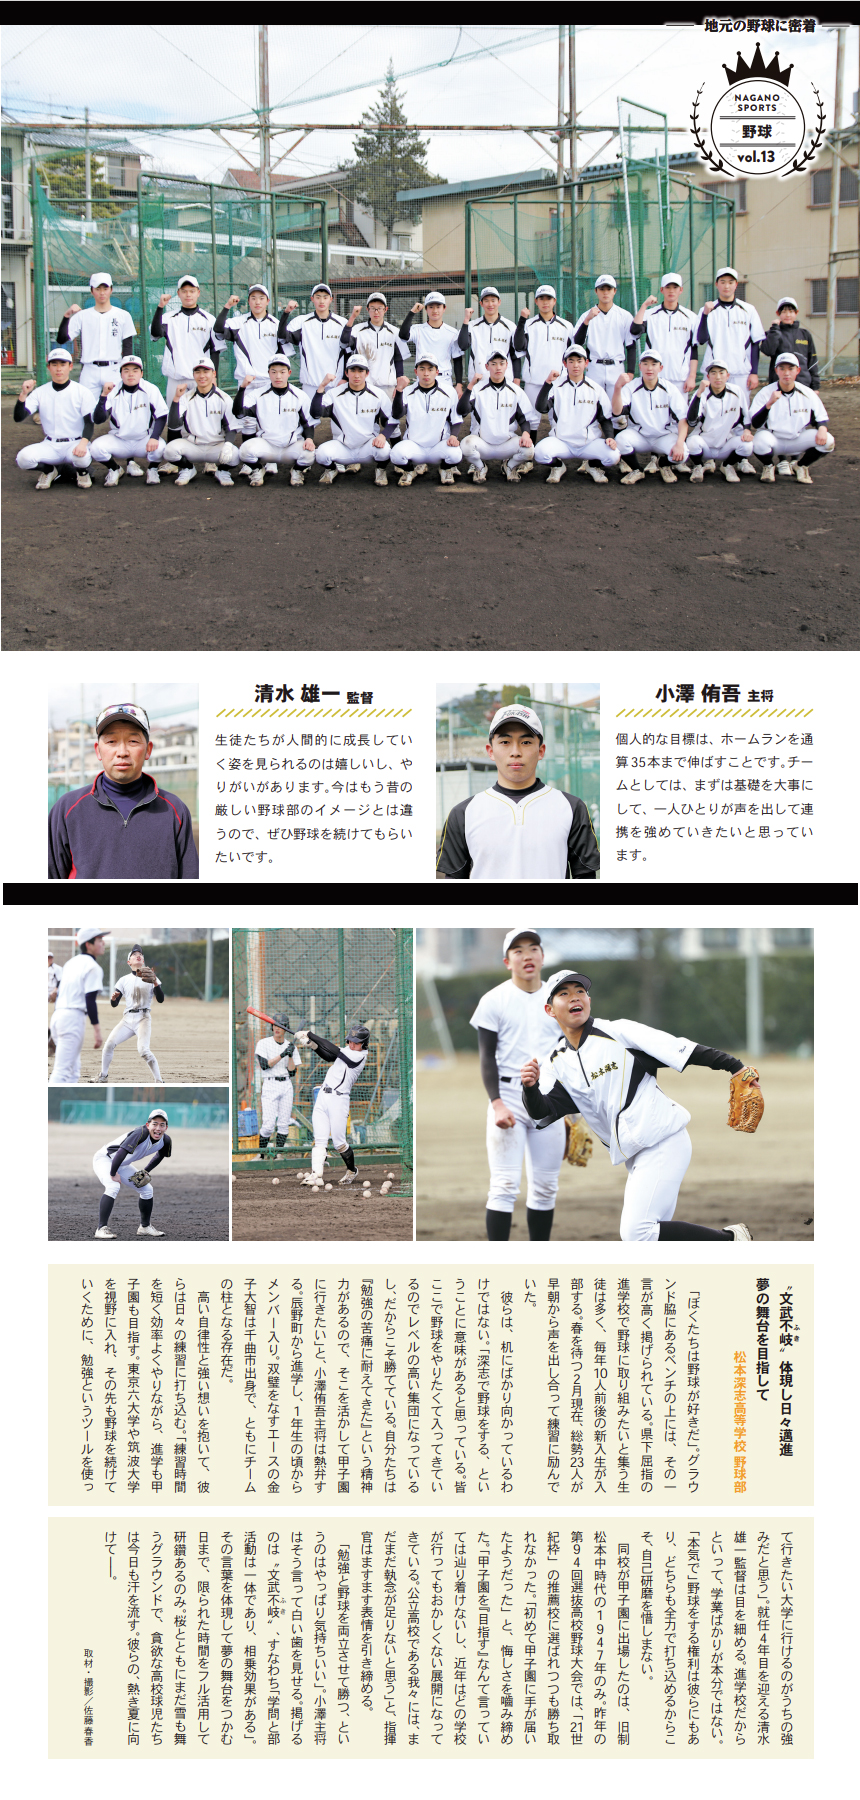 SPOCOLOR（スポカラ）に松本深志高校野球部が紹介されました 長野県松本深志高校野球部 公式ページ